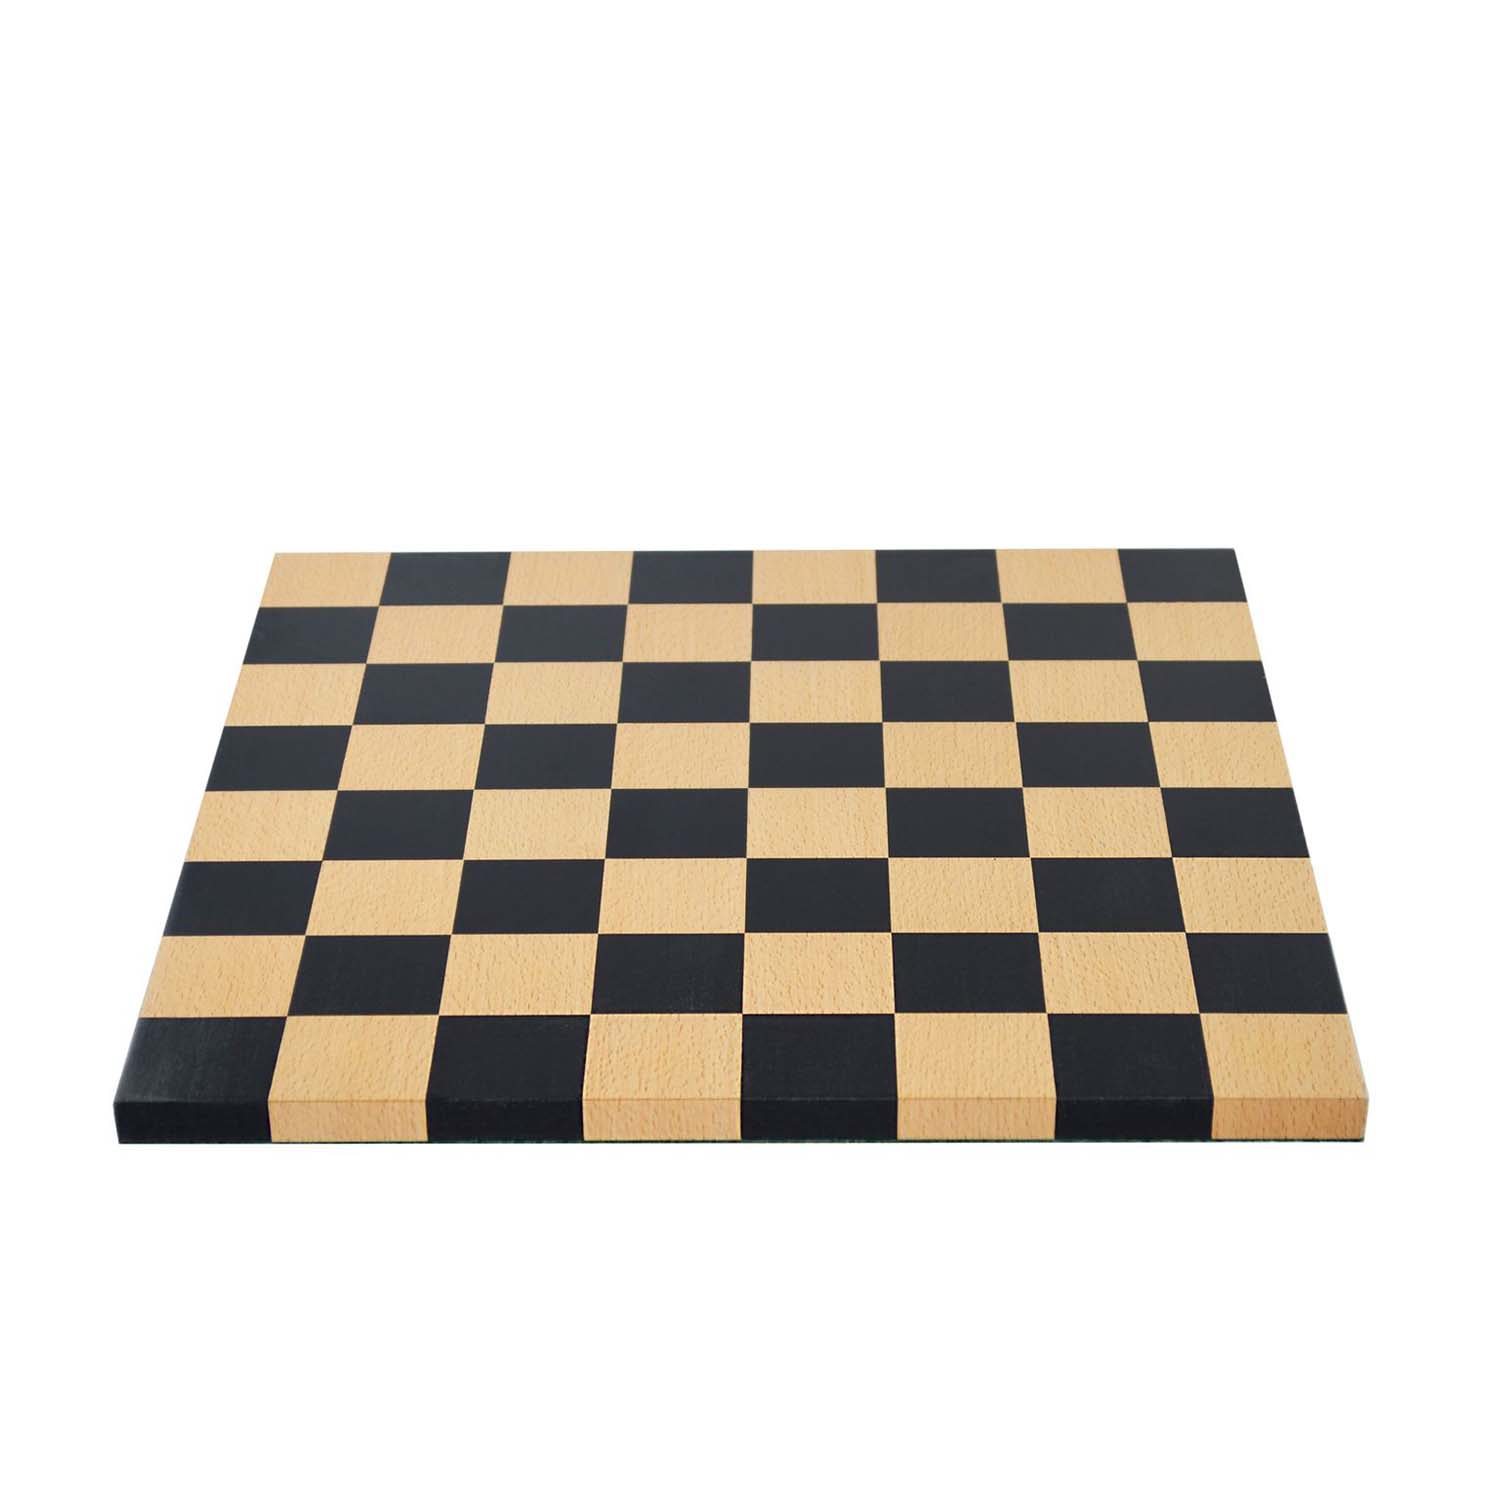 Satranç tahtası Man Ray resmi